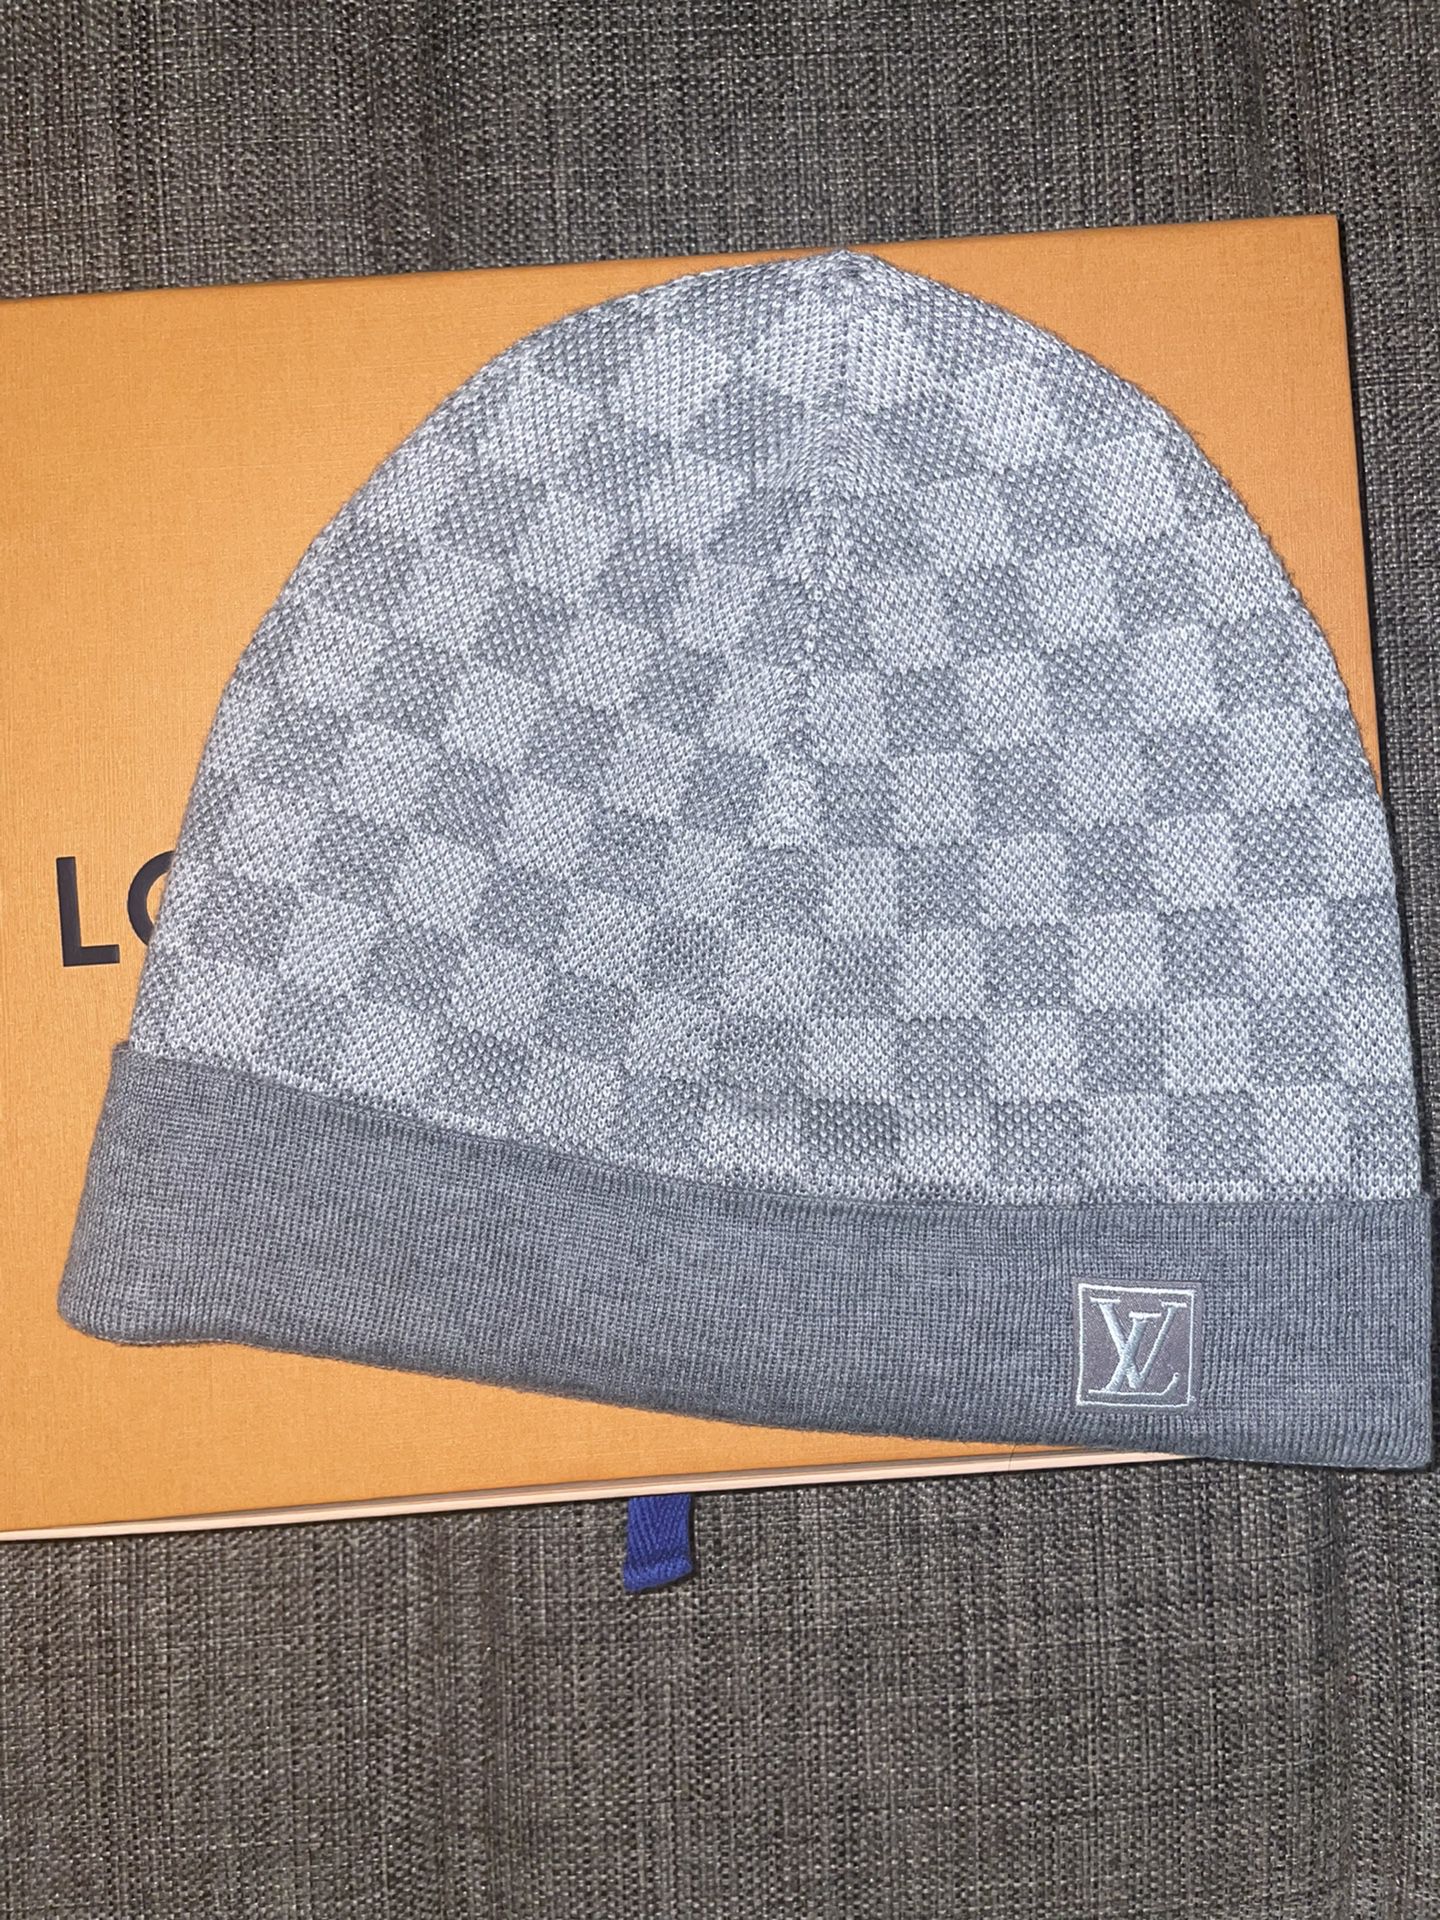 Louis Vuitton Hat Light Grey 